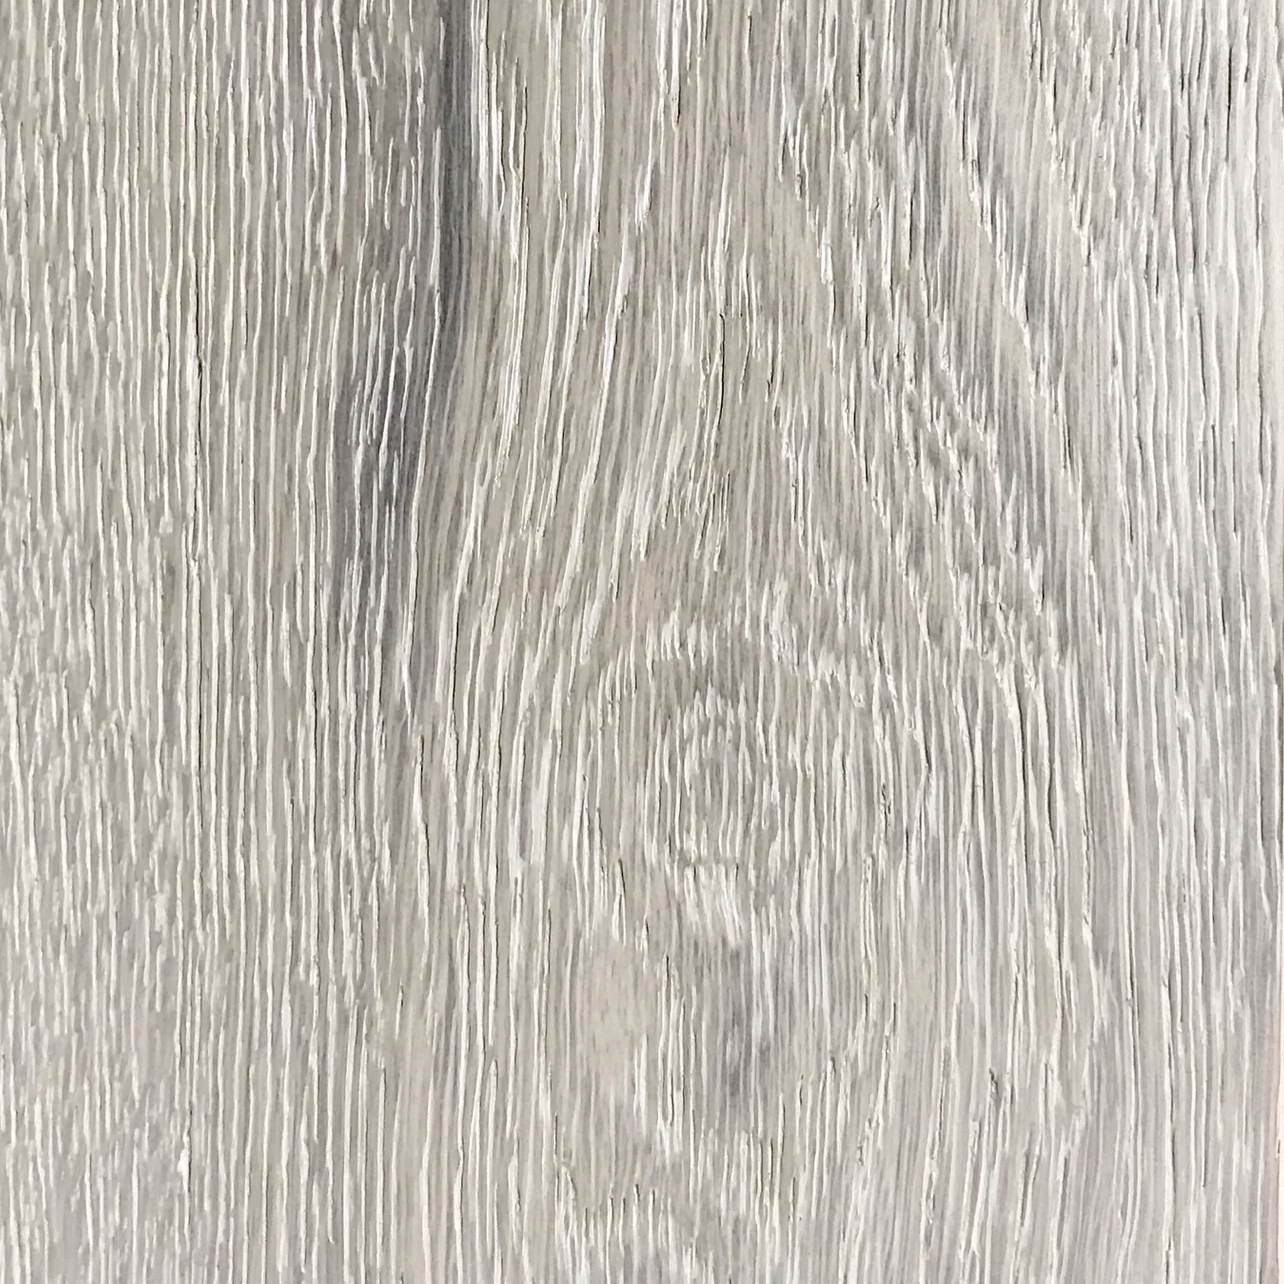 5" x 1/2" Engineered White Oak Astra Stain Hardwood Flooring